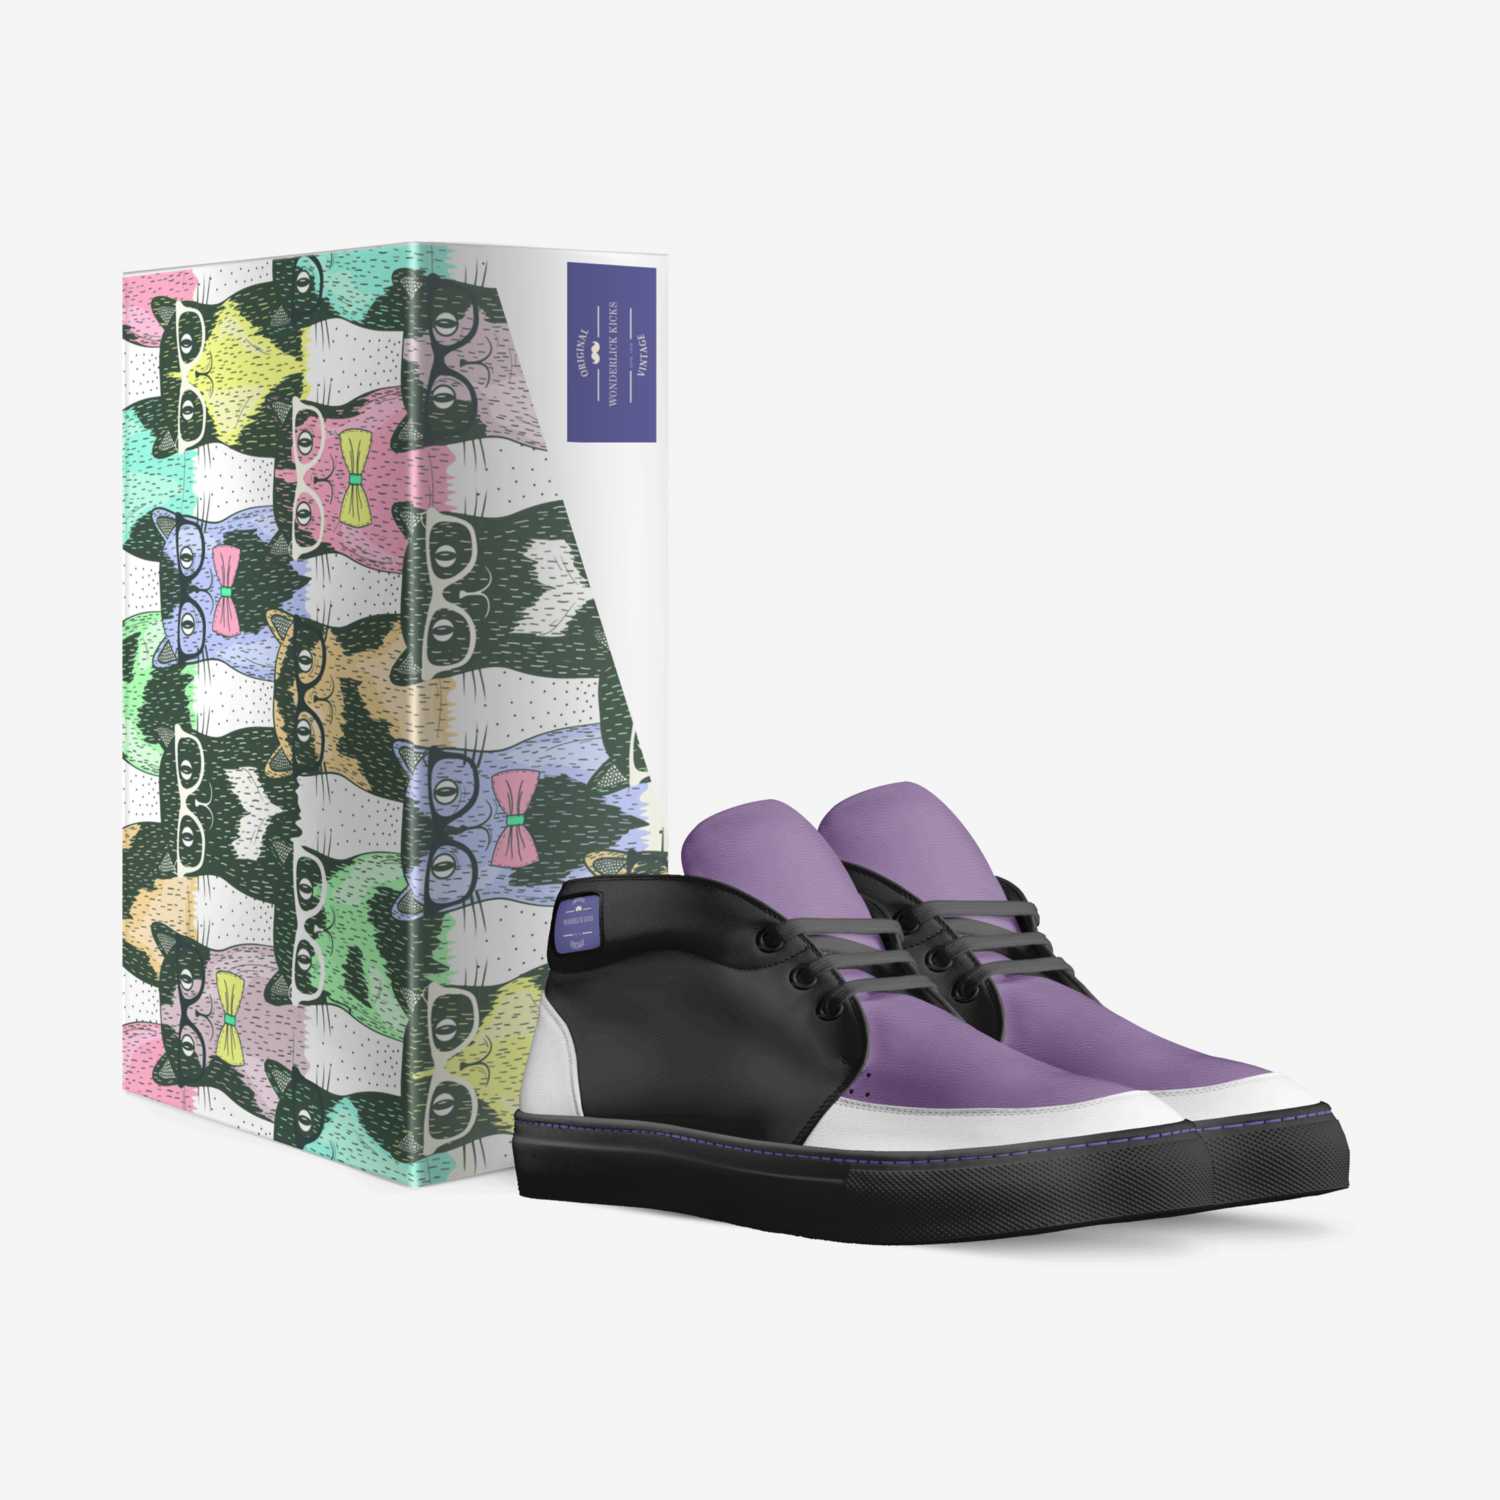 Wonderlick Kicks custom made in Italy shoes by Sarah Wonderlick | Box view